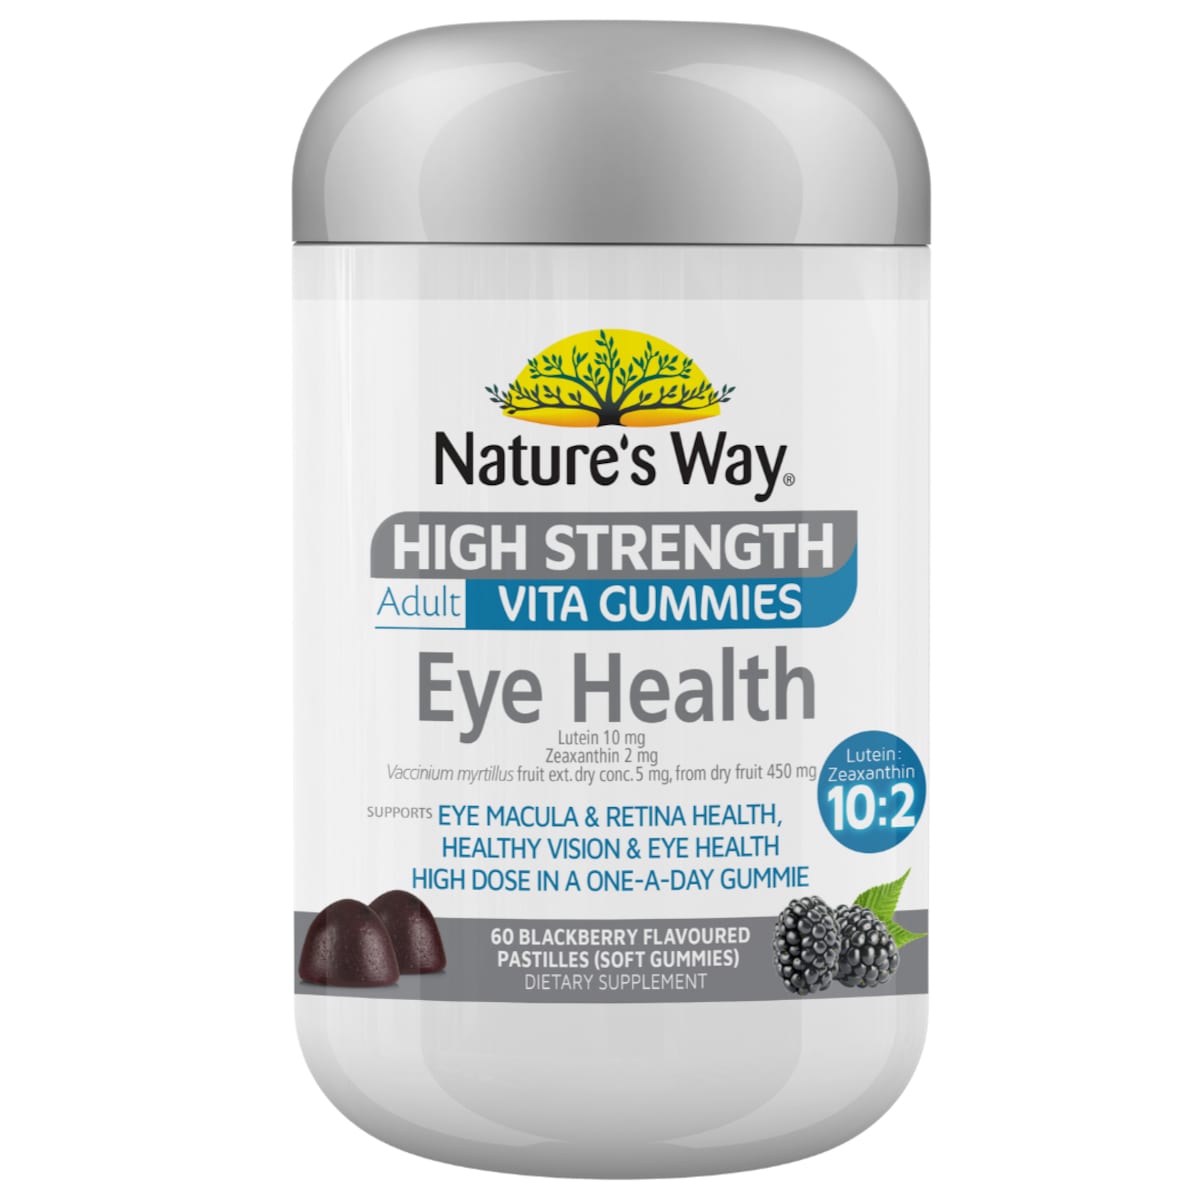 Natures Way High Strength Adult Vita Gummies Eye Health 60 Pack